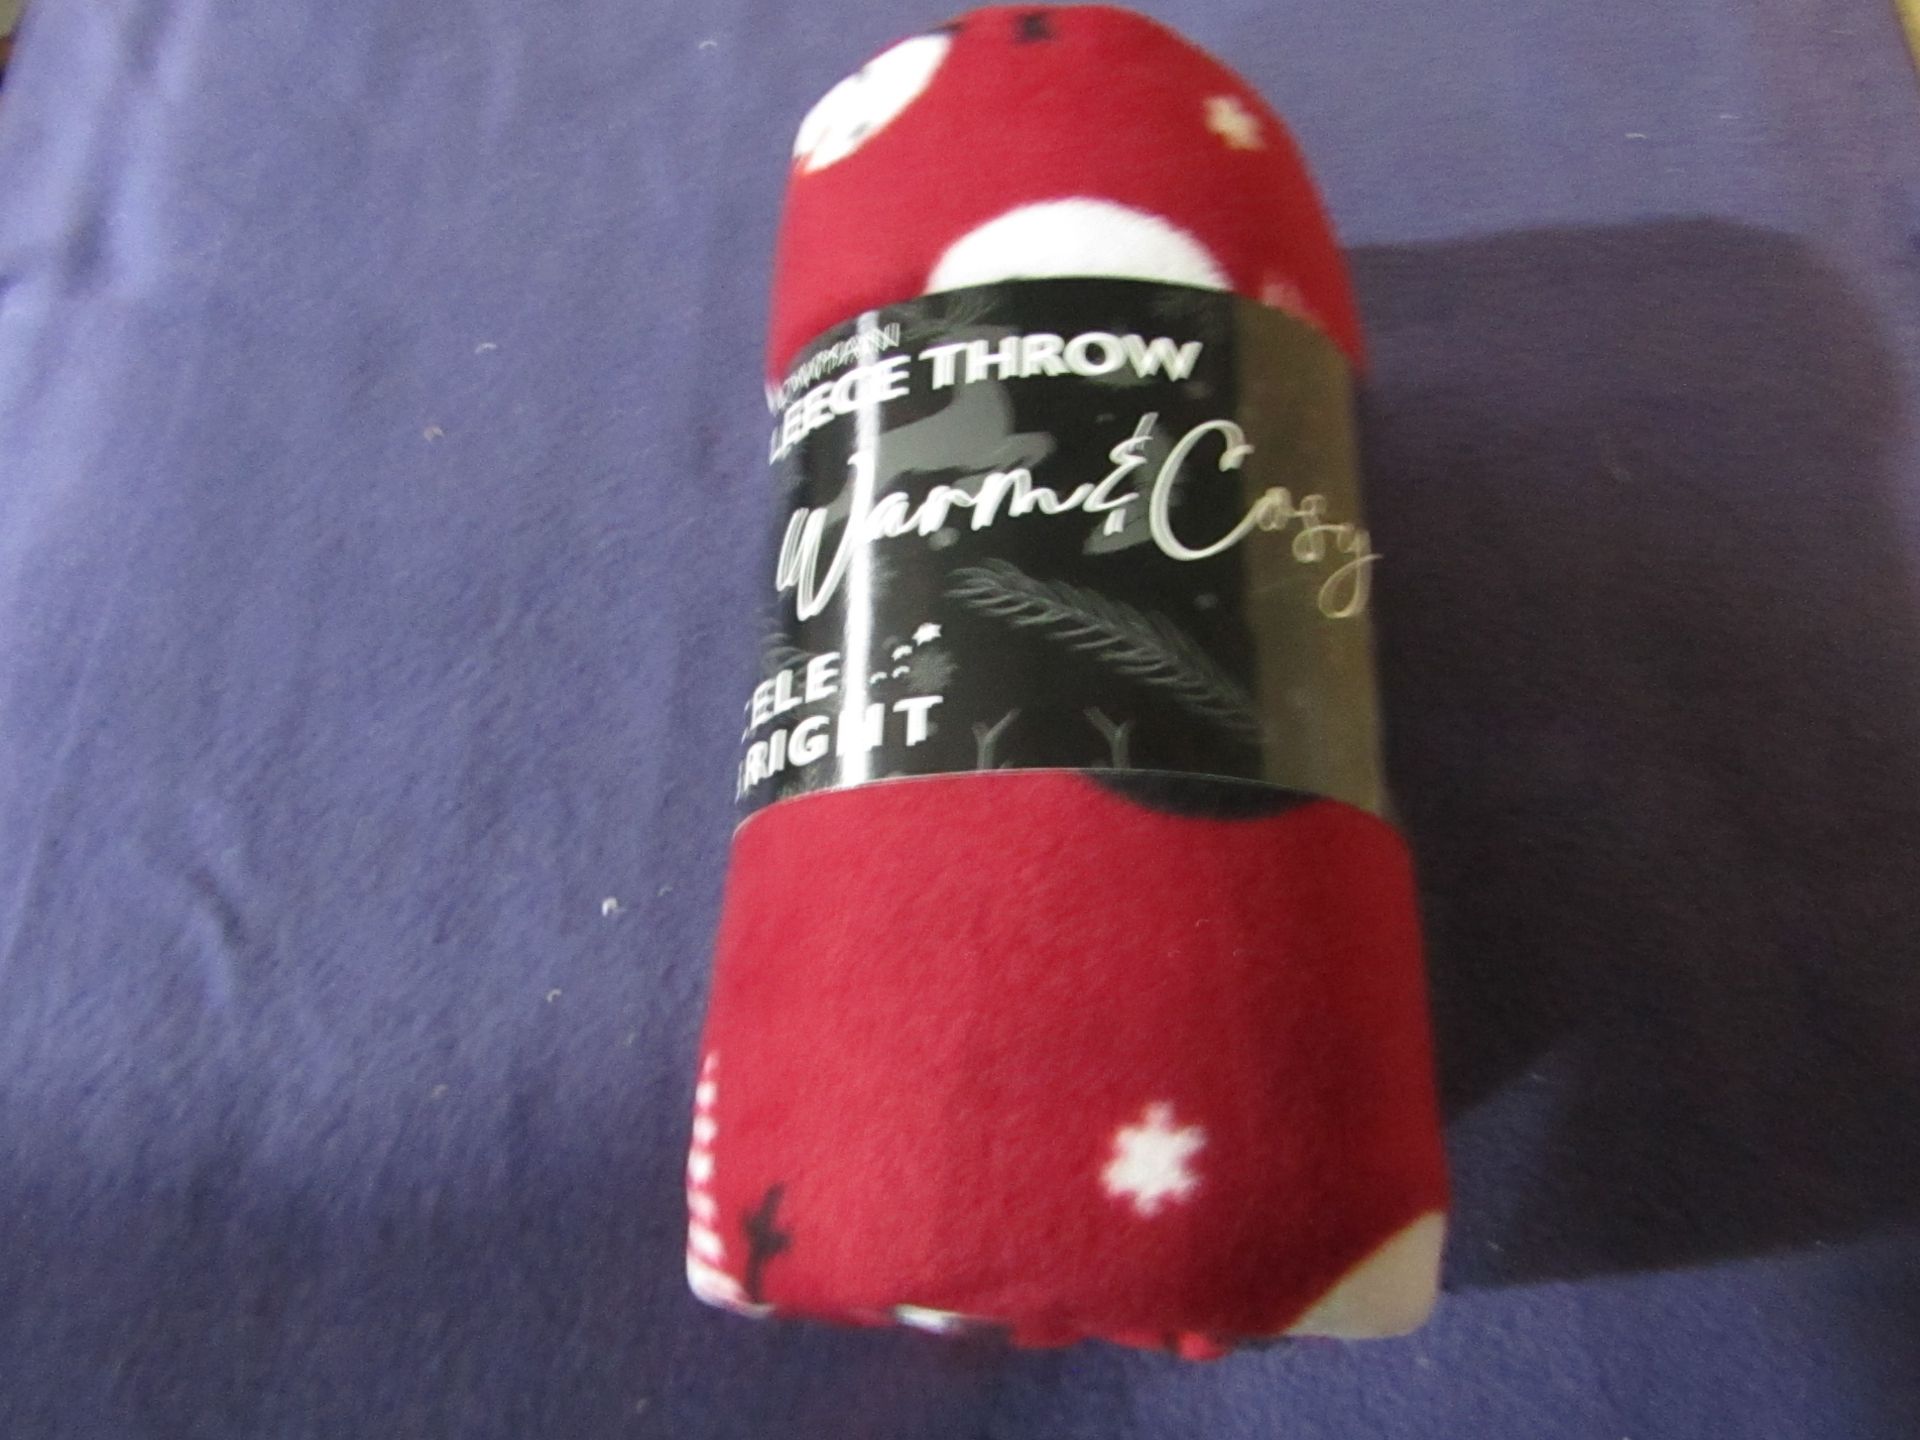 Celebright - Snowman Fleece Throw - Size Unknown - Unused & Packaged.